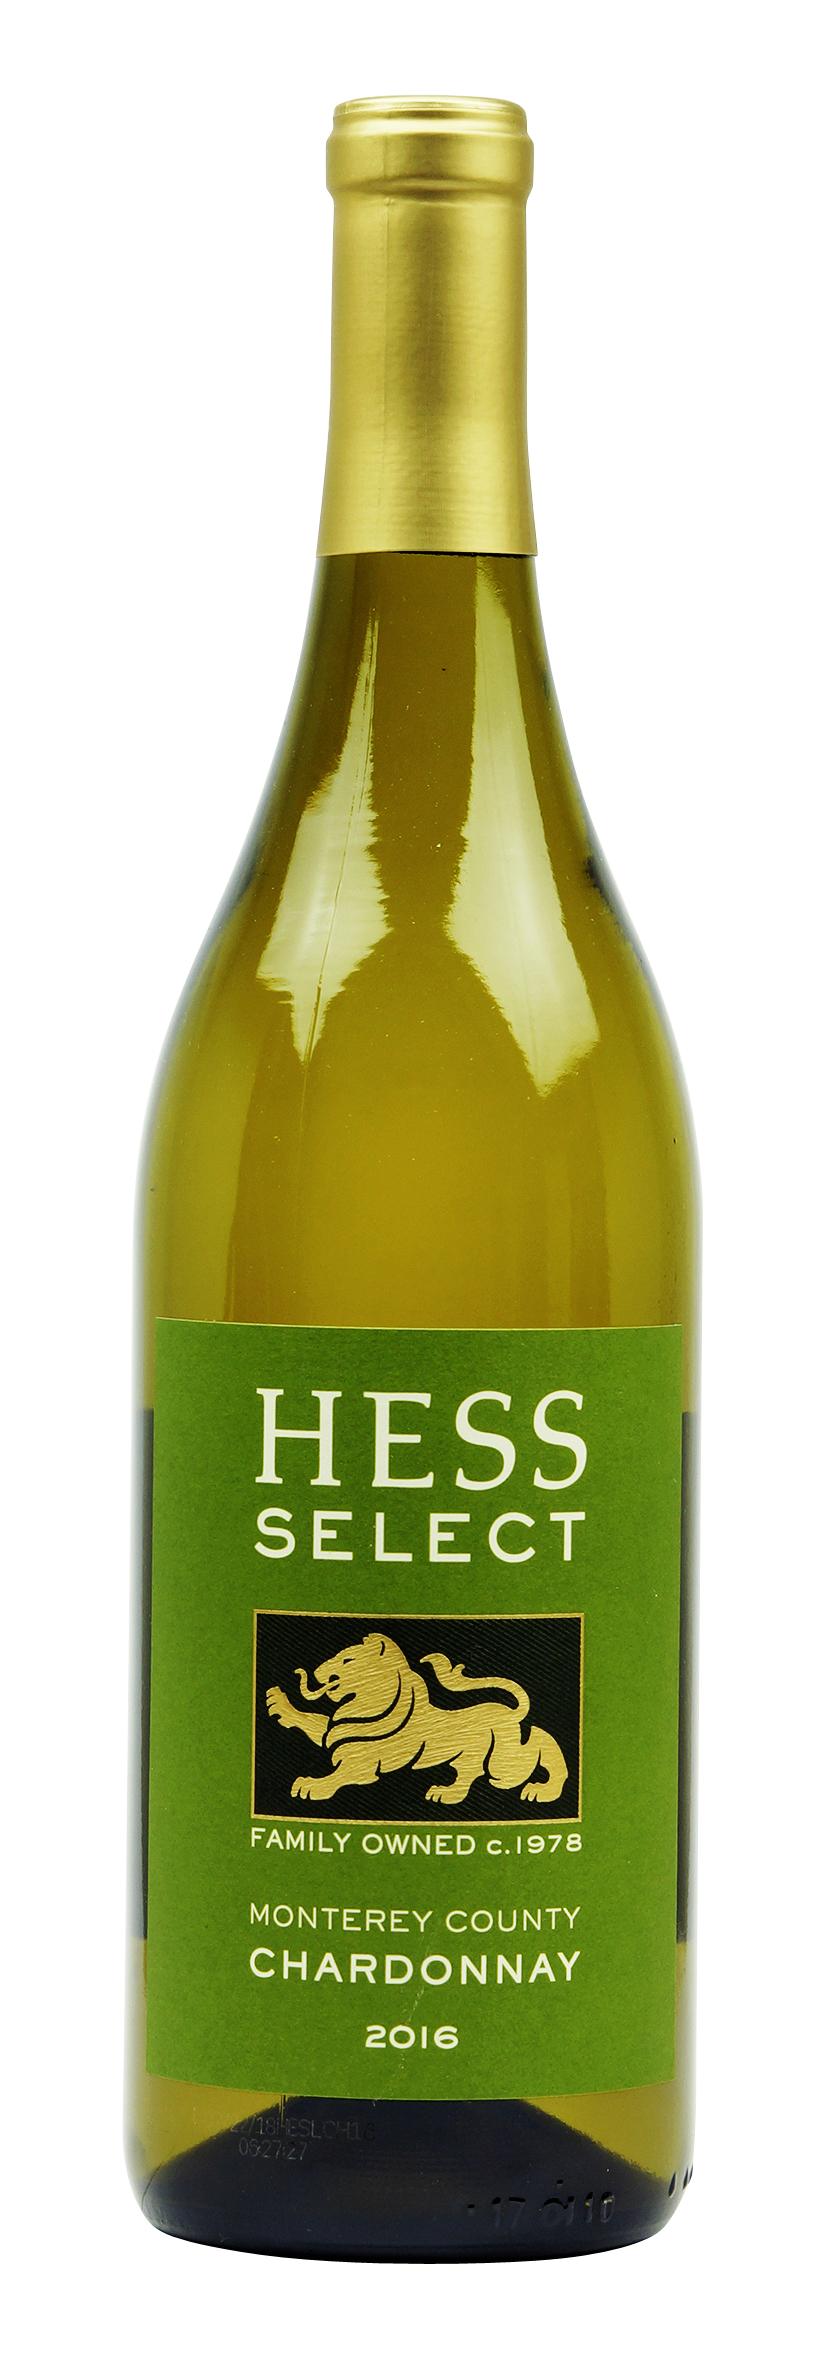 Monterey County Hess Select Chardonnay 2016